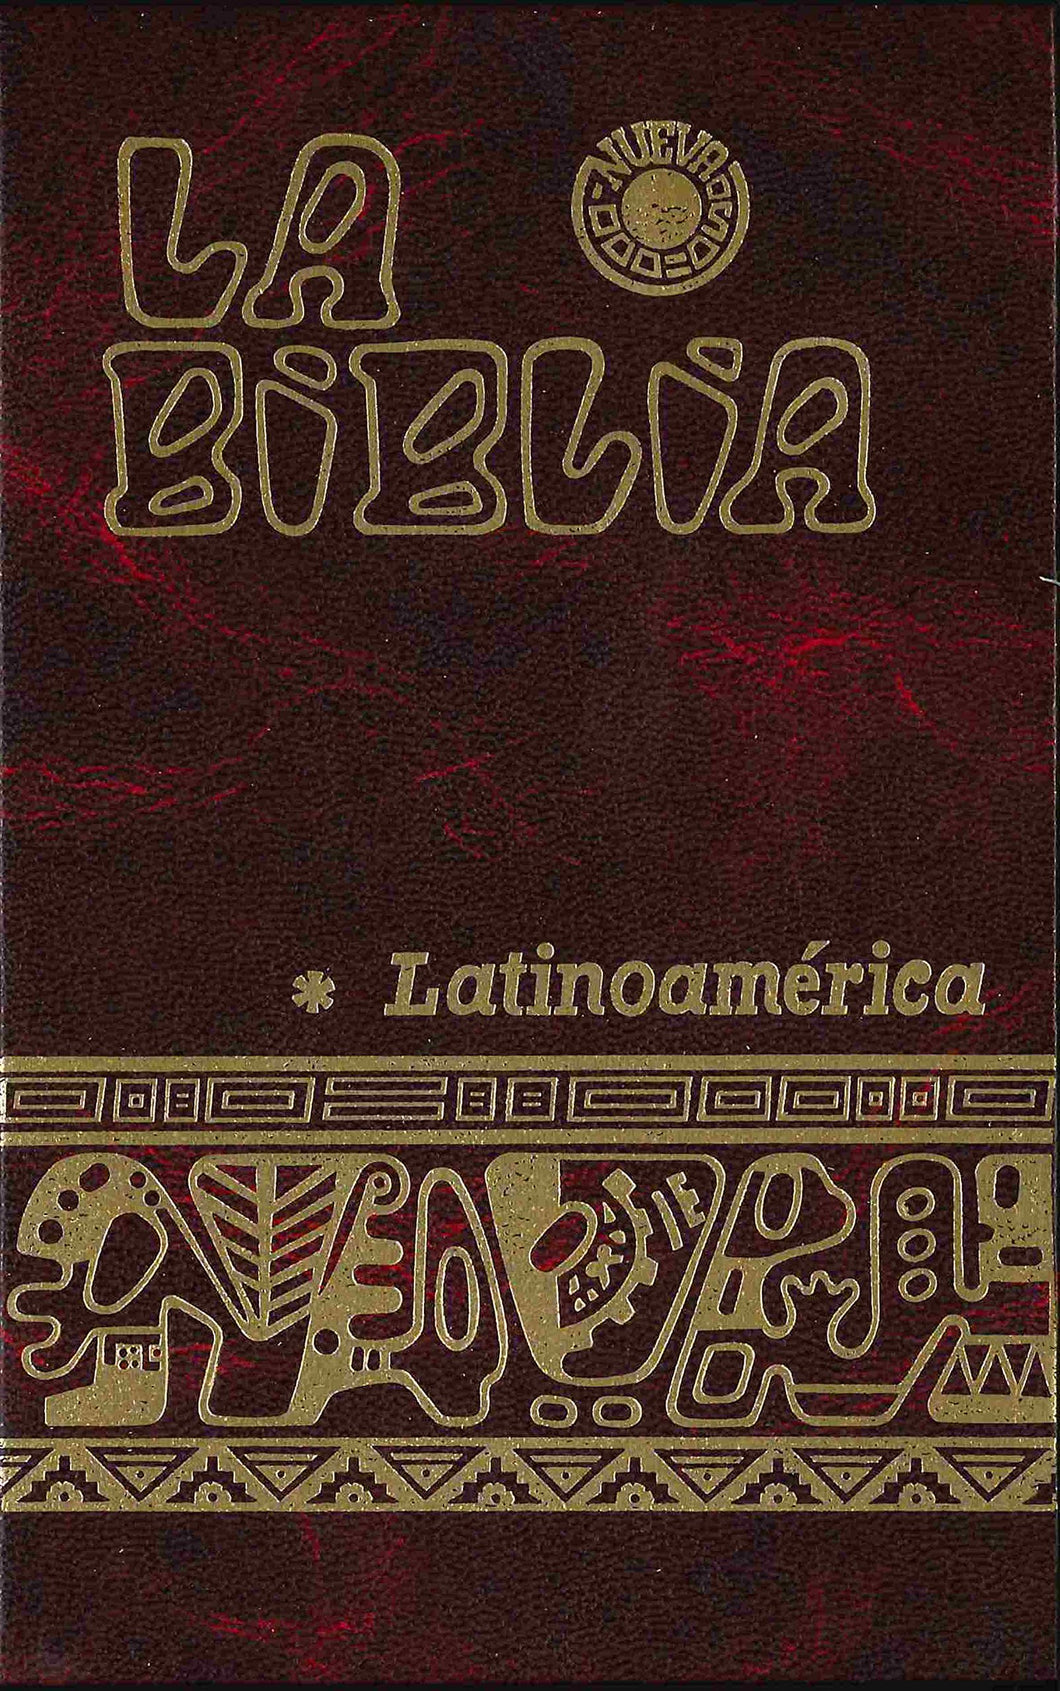 Biblia Latinoamericana de bolsillo (Spanish Edition) (Spanish and English Edition)